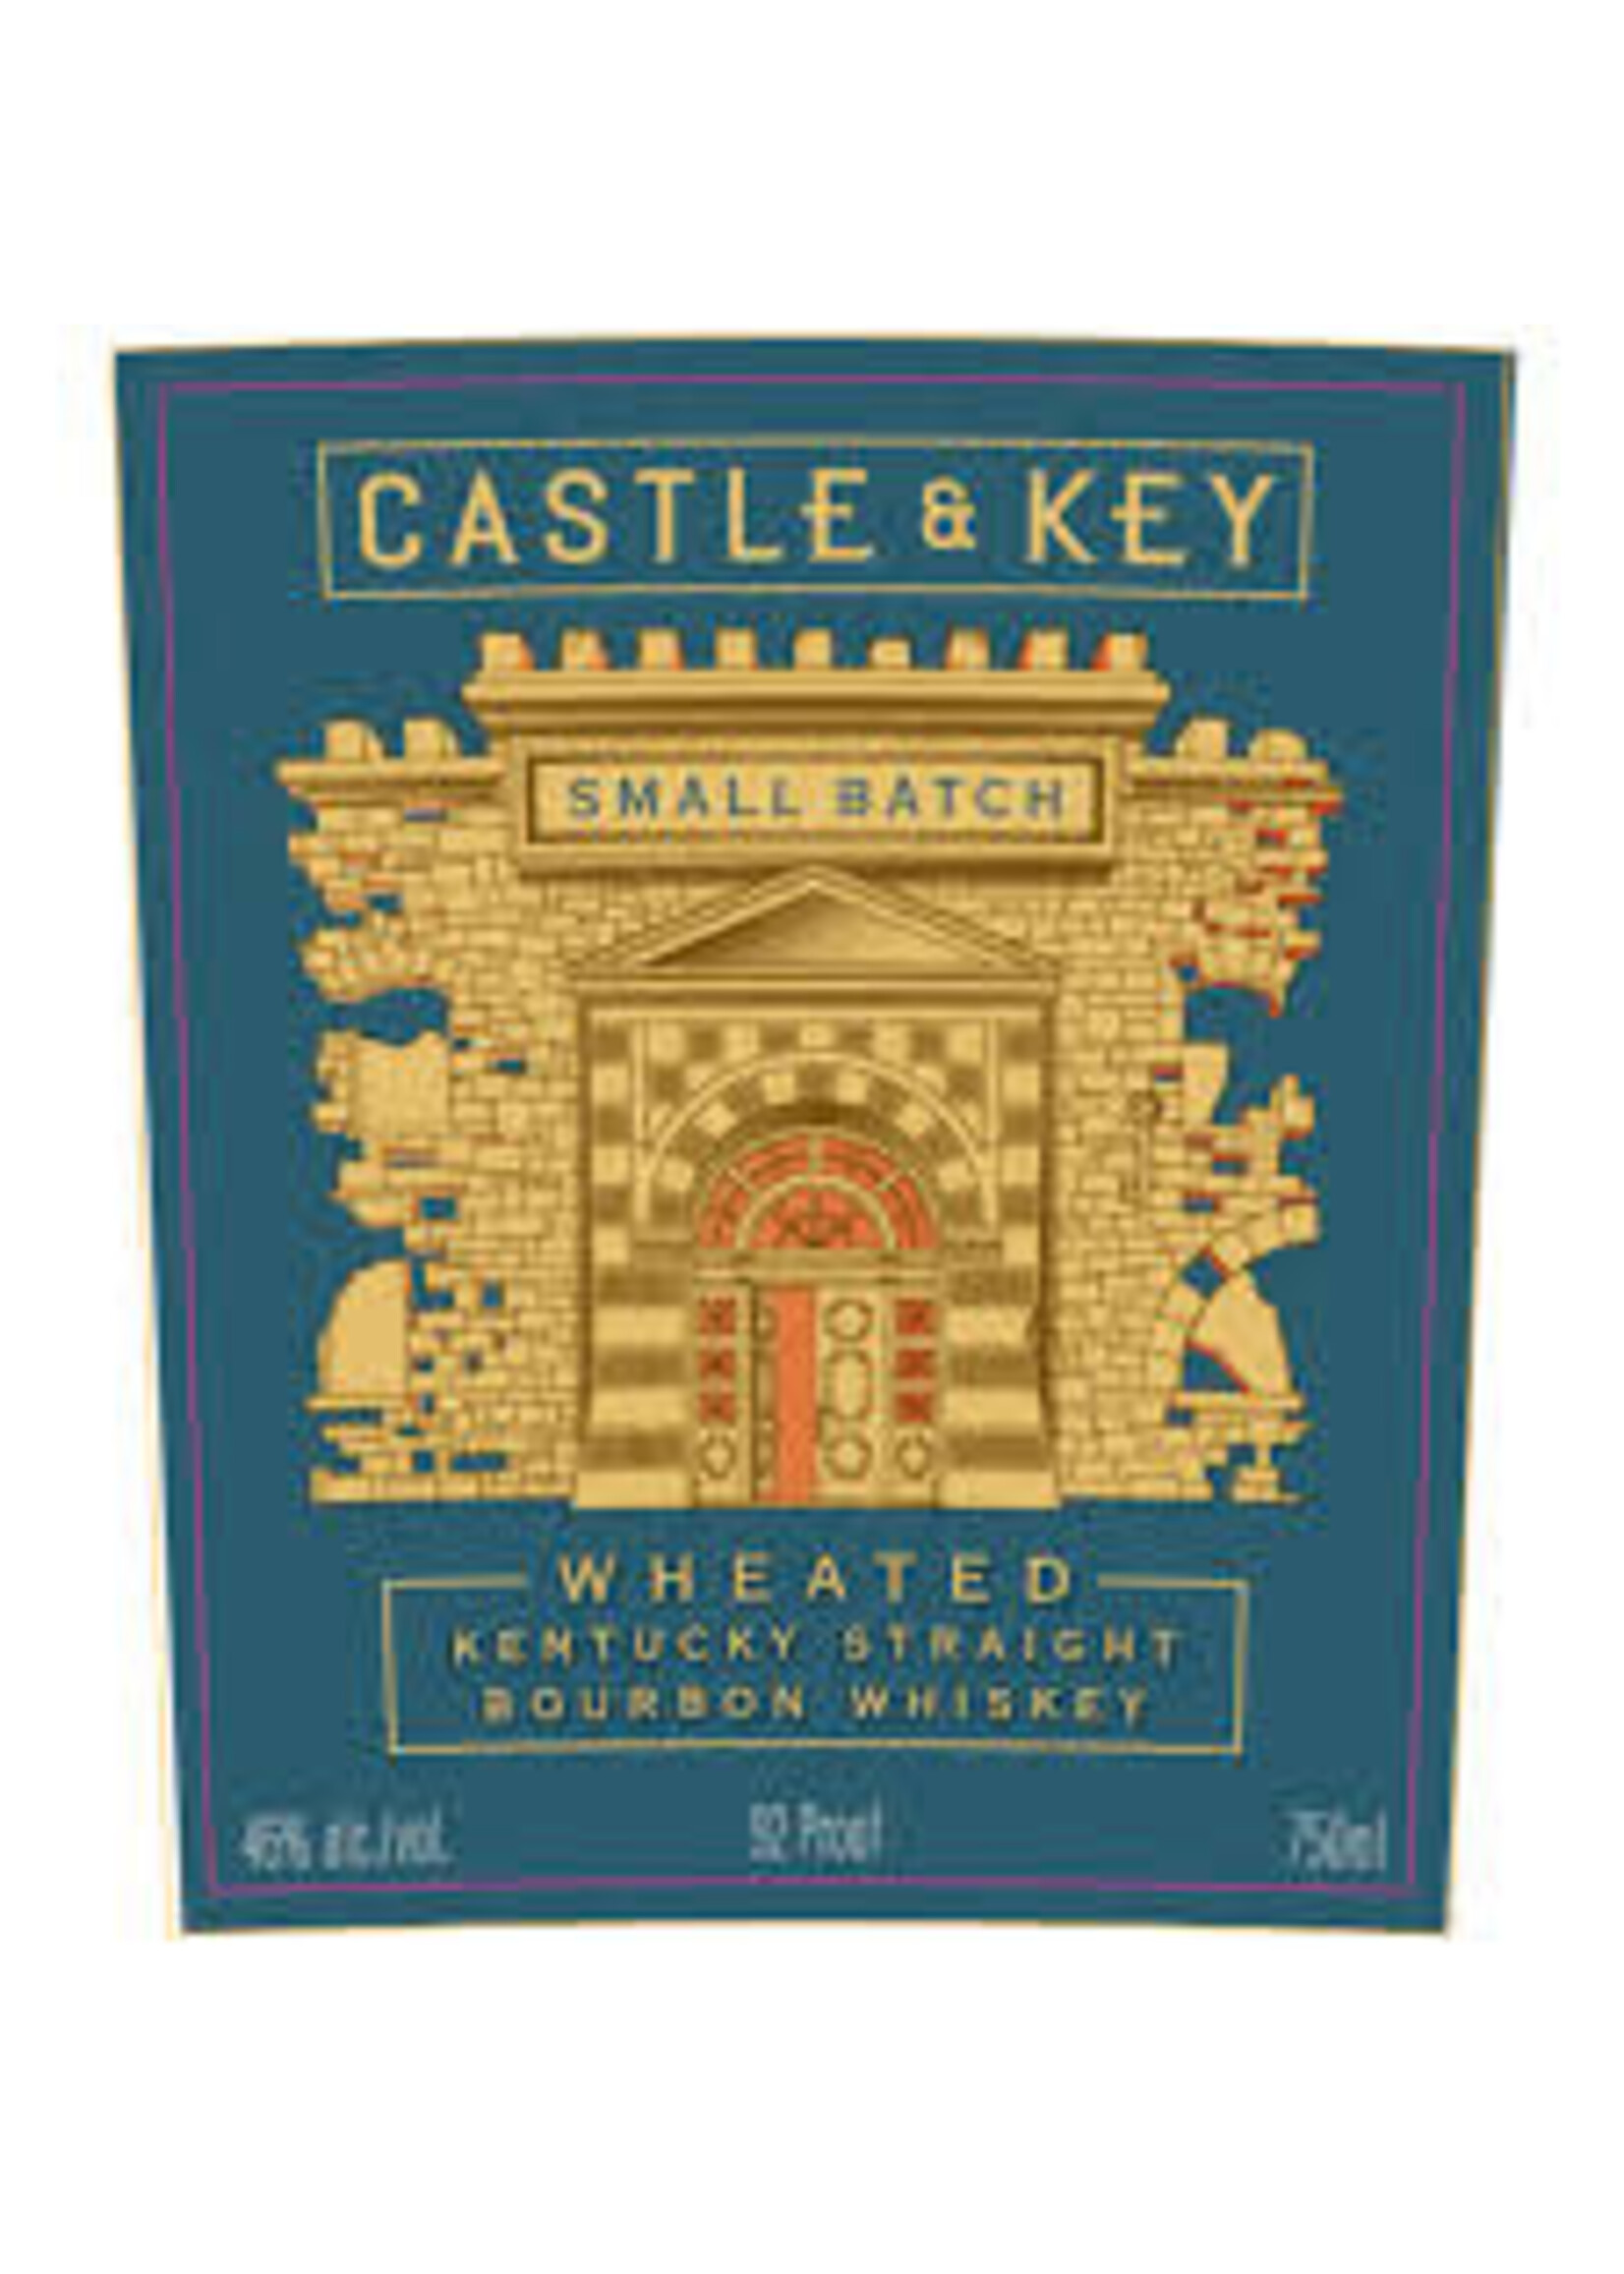 Castle & Key Small Batch Wheated Kentucky Straight Bourbon Whiskey 750ml